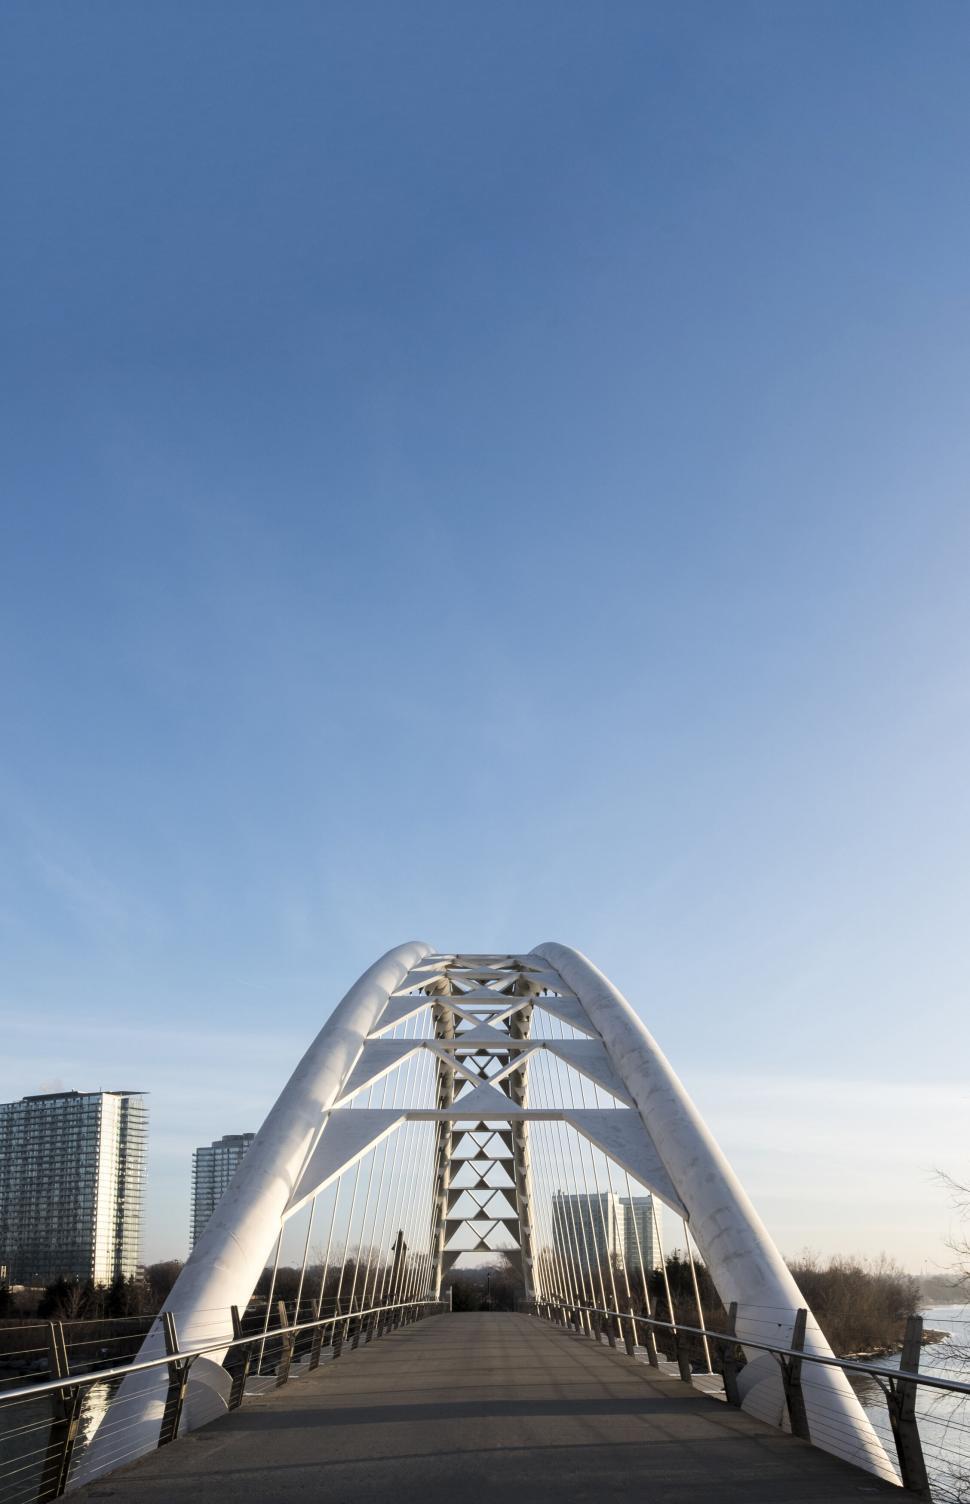 Free Image of Modern pedestrian bridge against a clear sky 